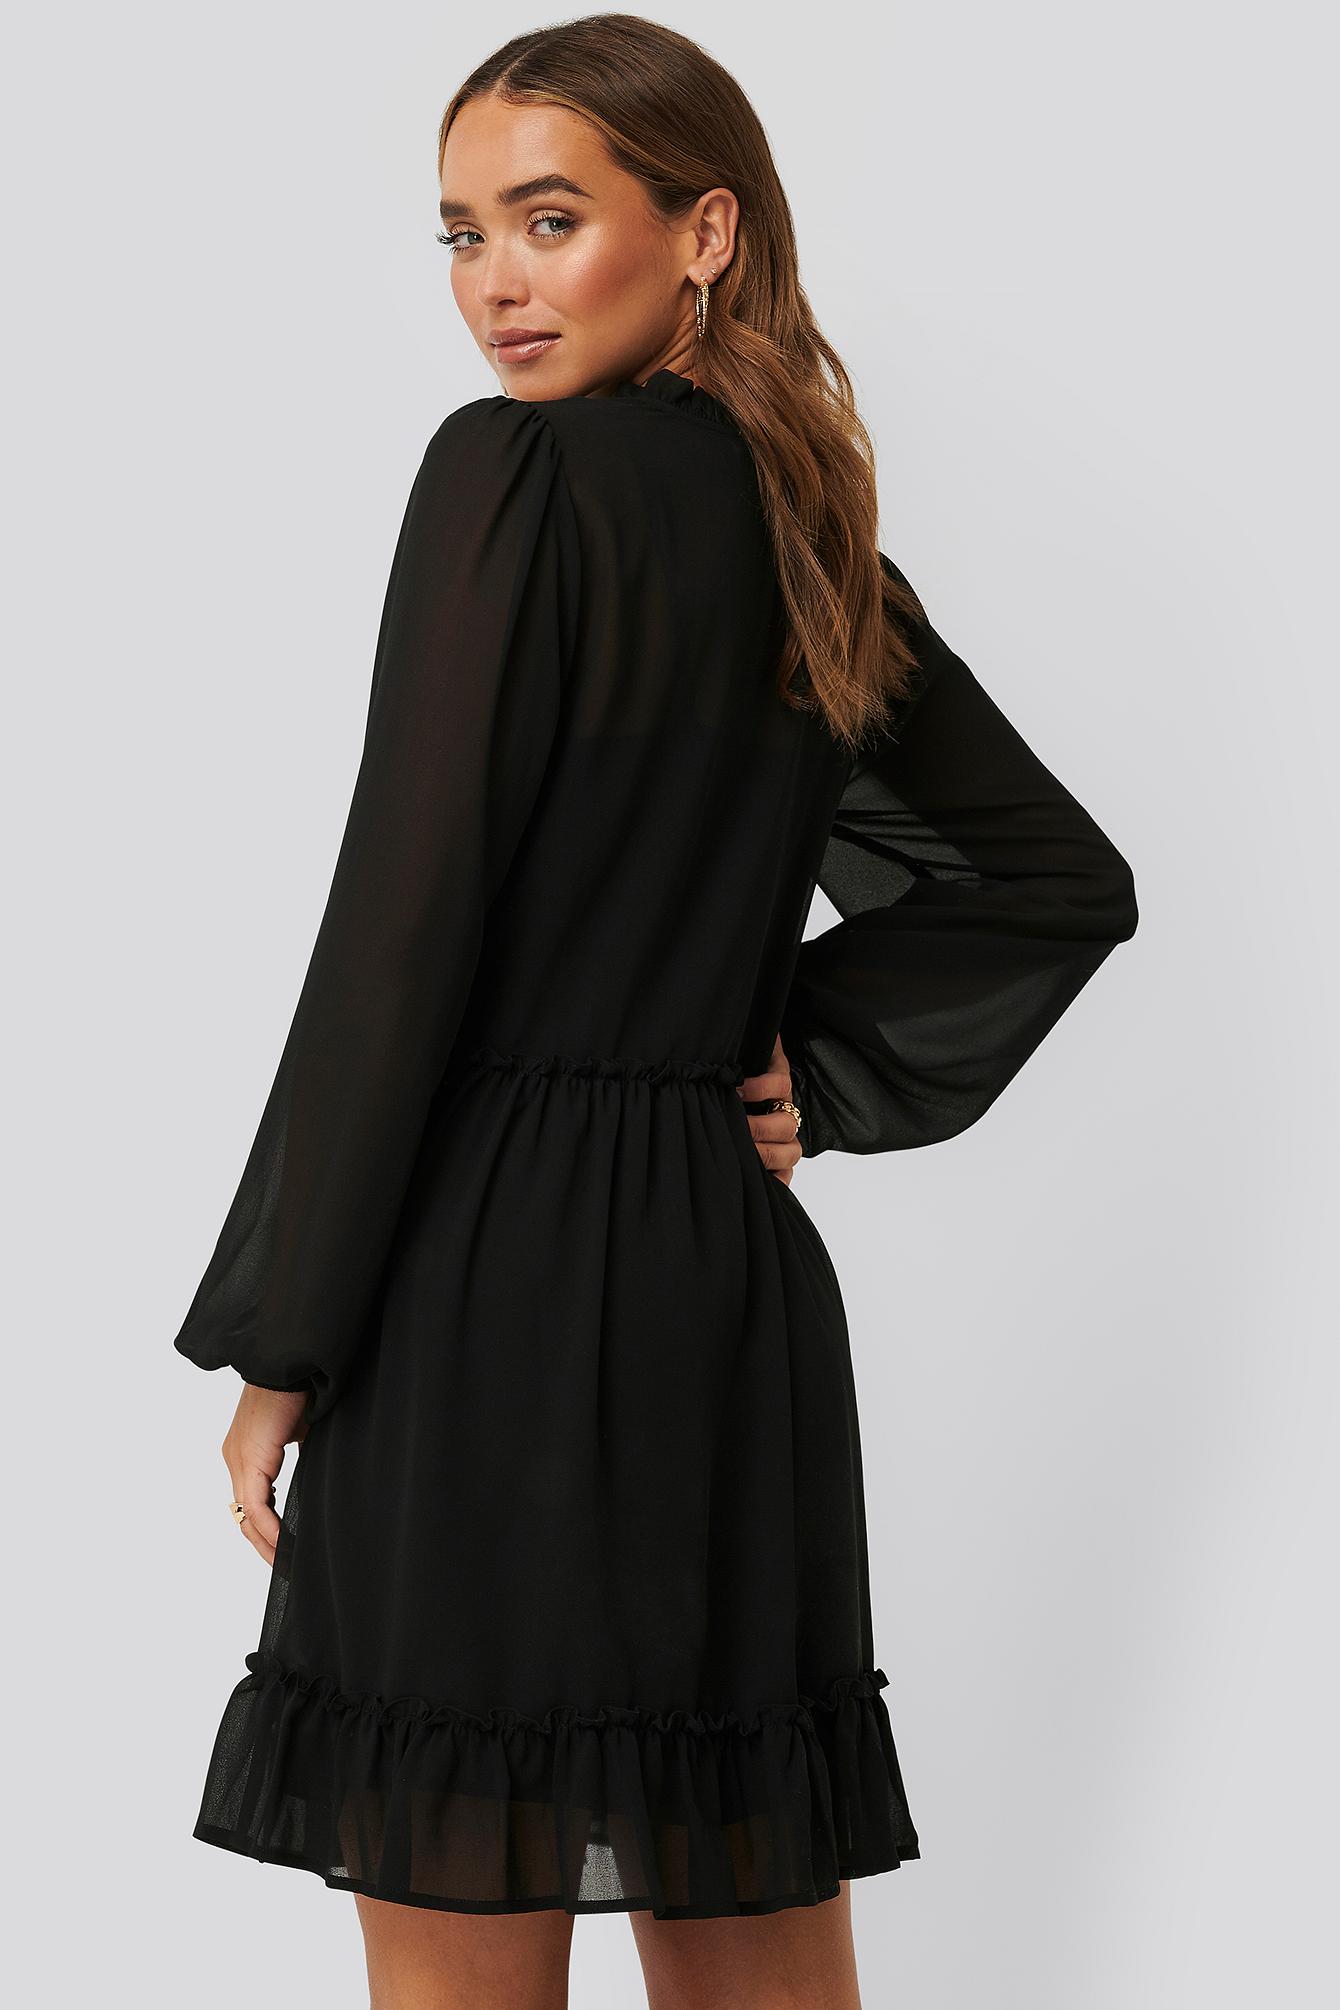 Black Long Sleeve Flowy Mini Dress ...